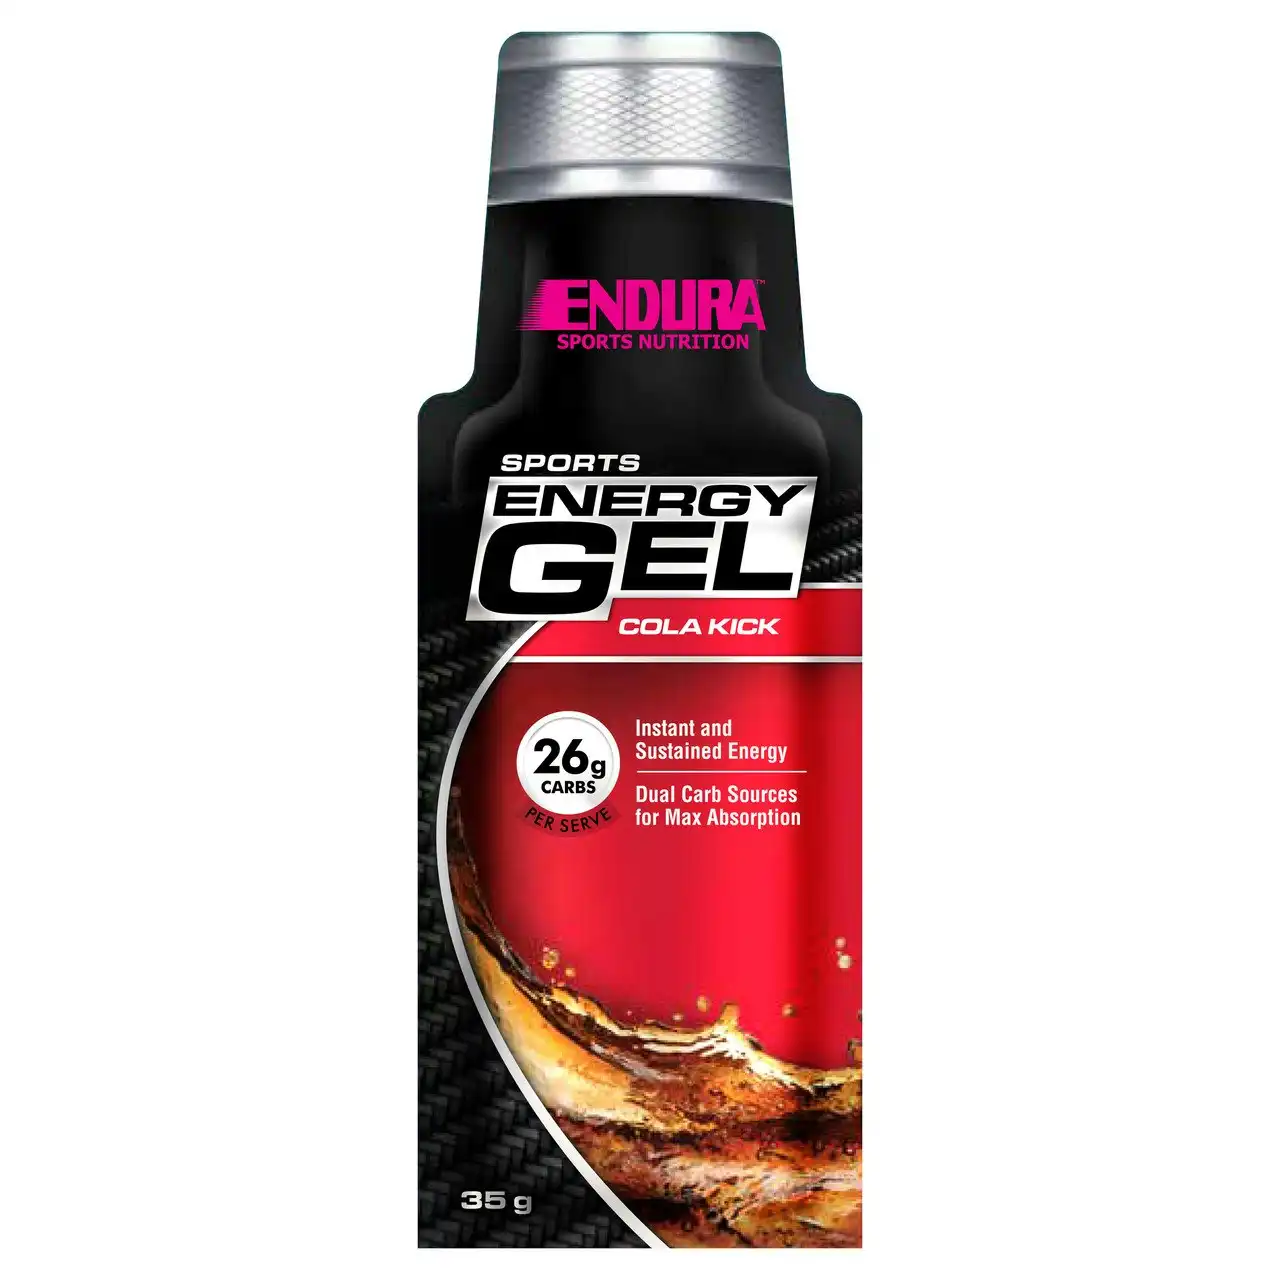 Endura Sports Energy Gel Cola Kick 35g Sachet